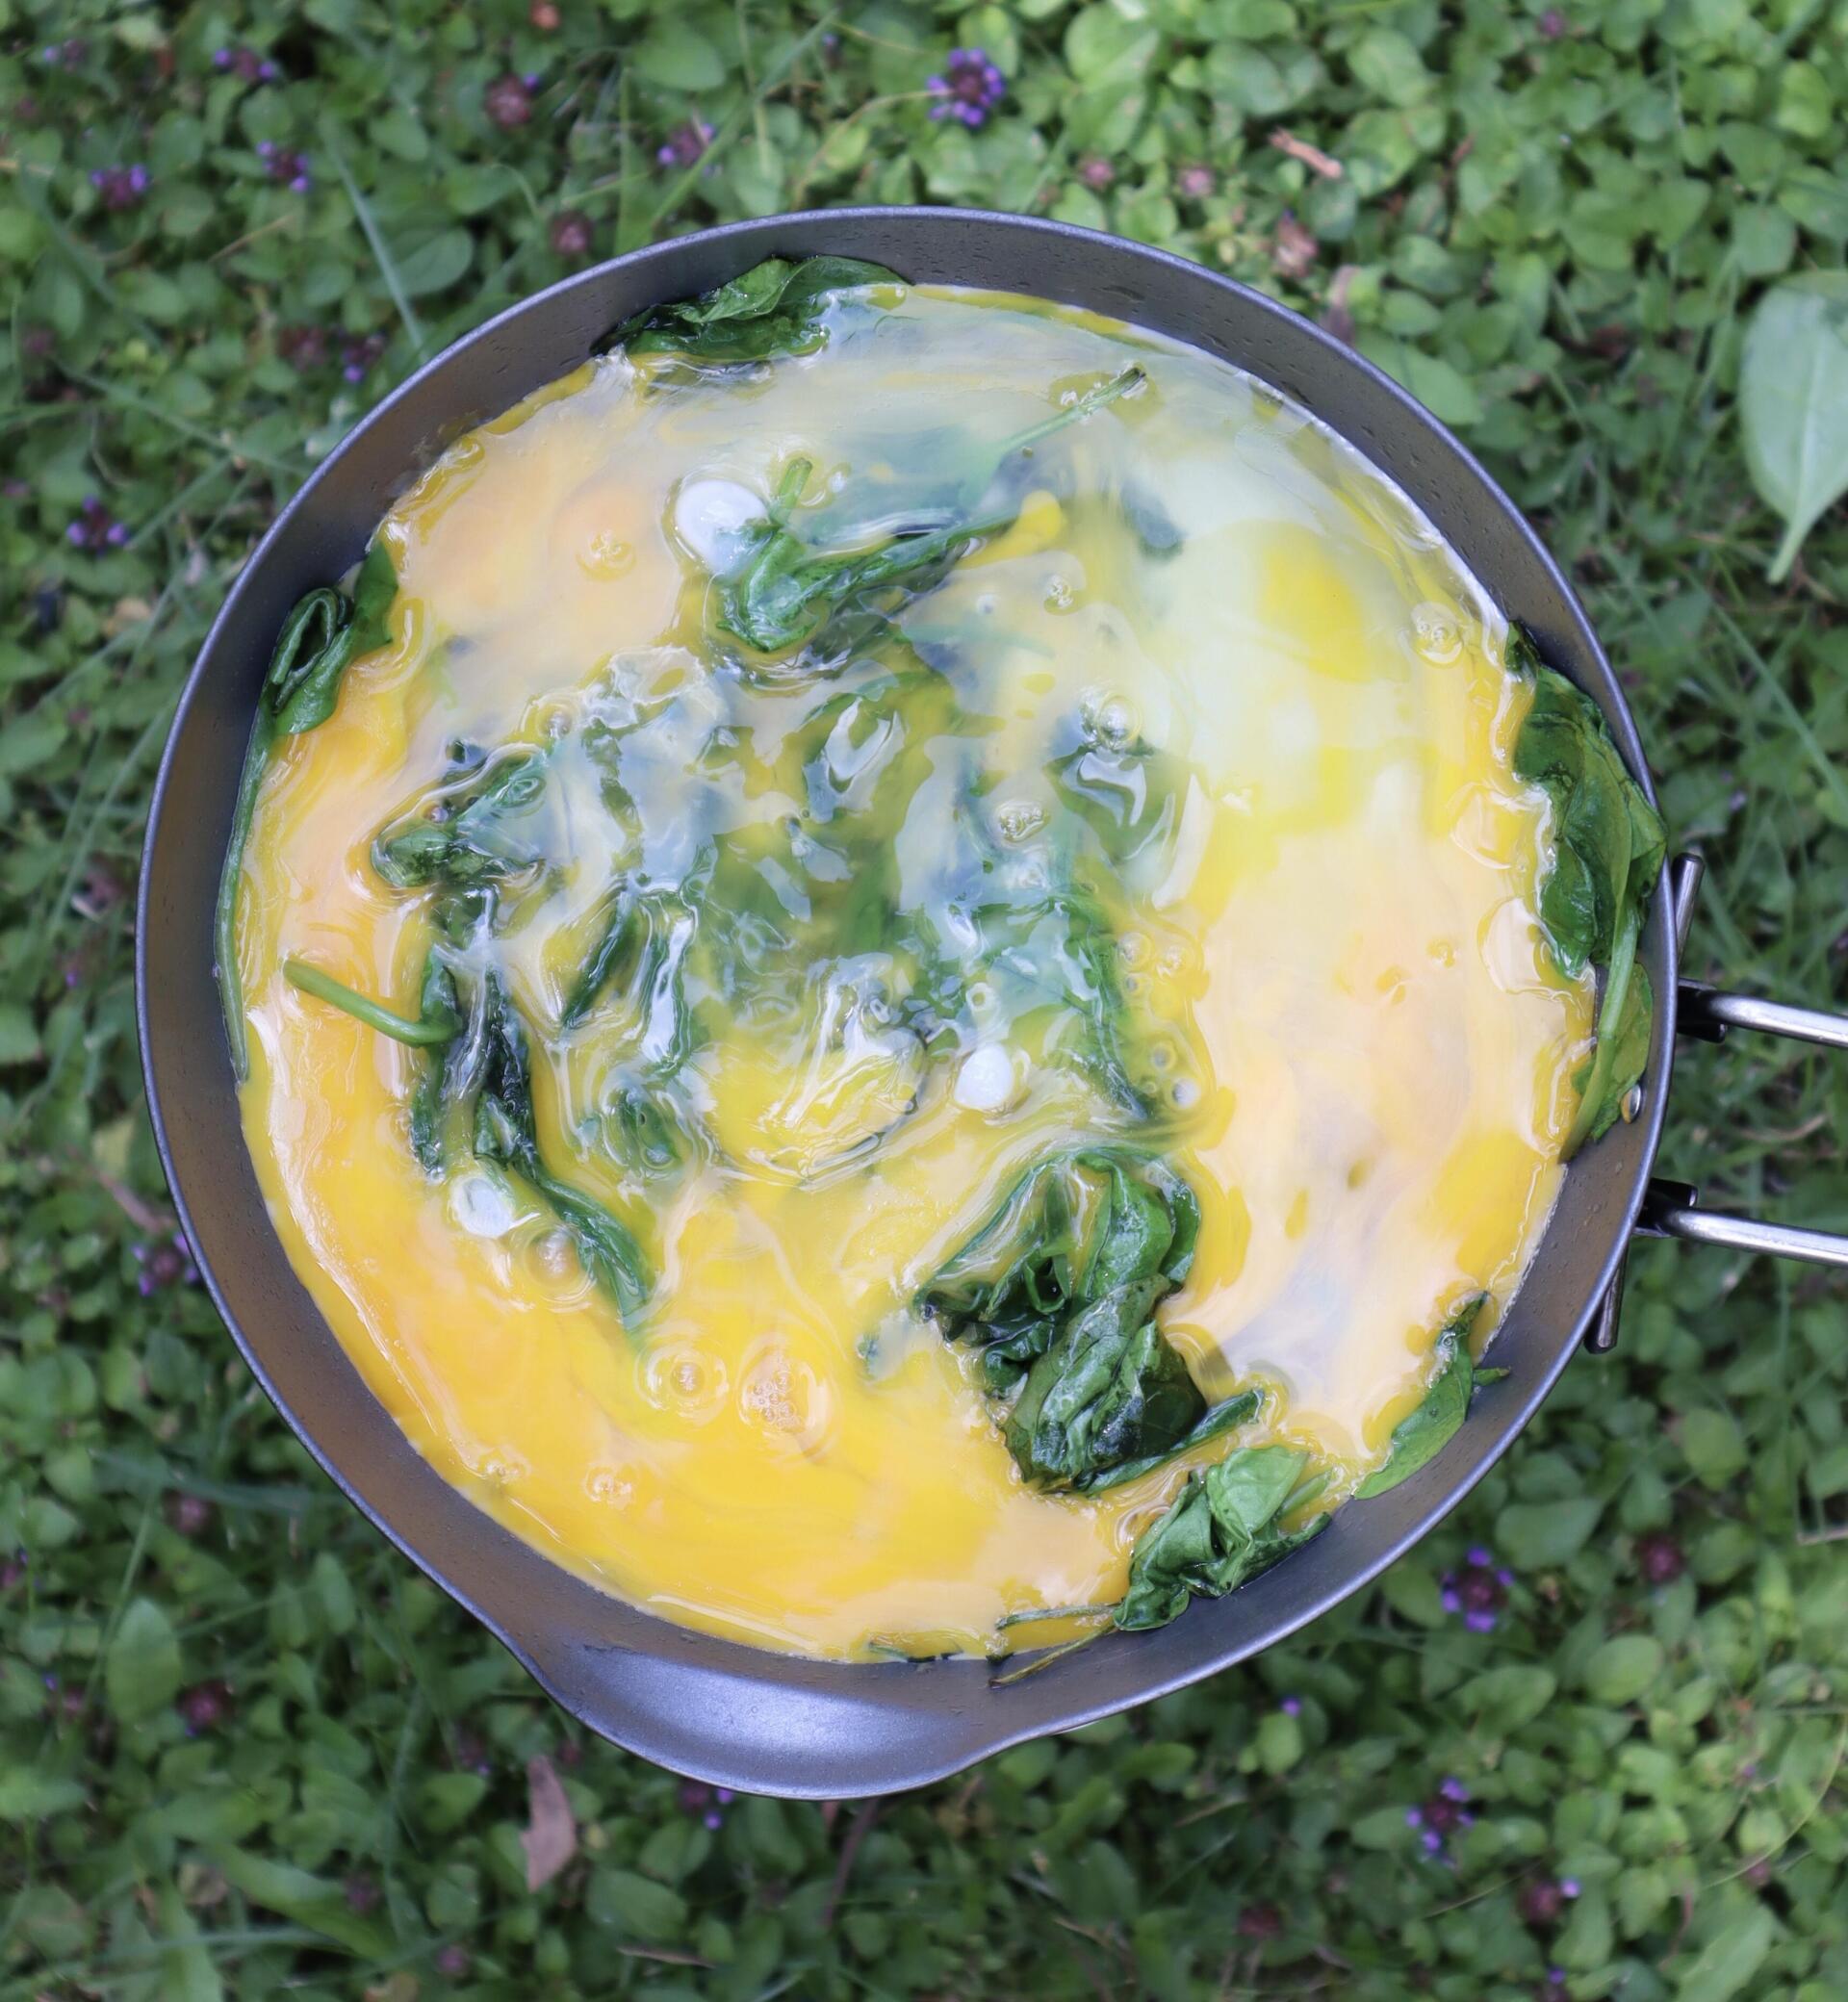 Spinach chorizo omelette